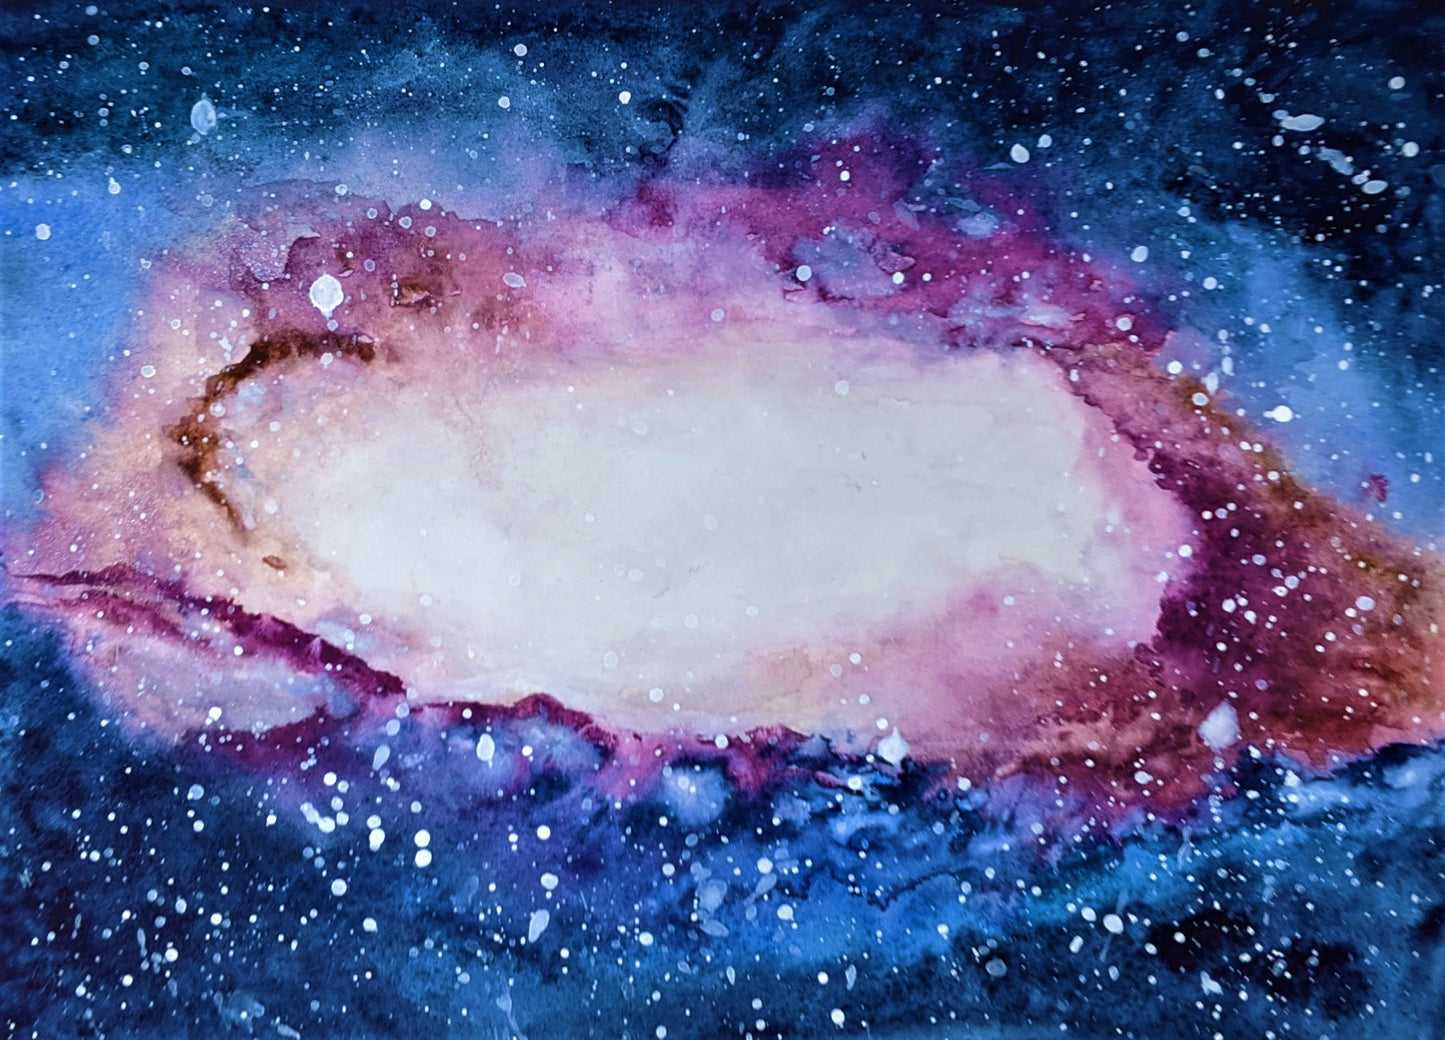 Galaxy watercolor painting